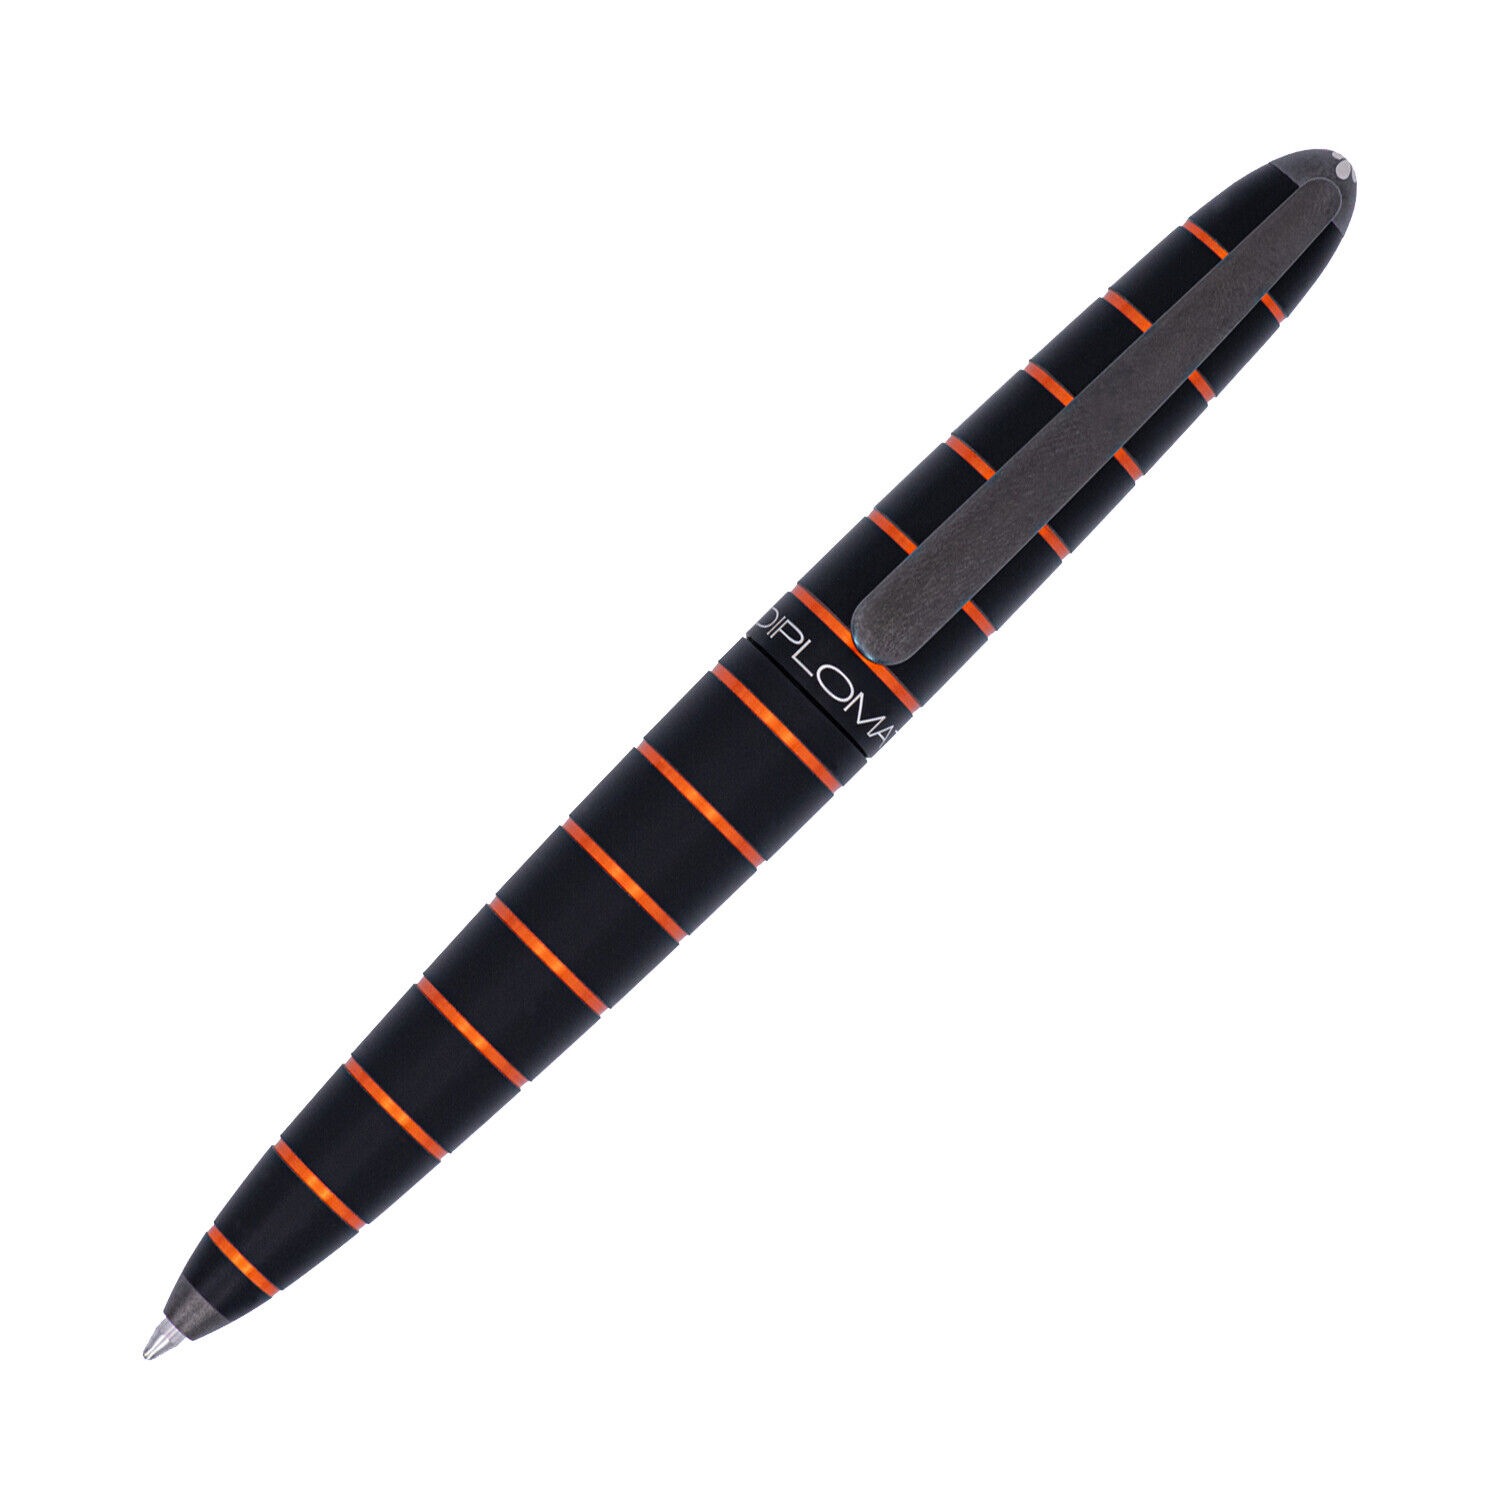 Diplomat Elox Ballpoint Pen in Ring Black/Orange - NEW in Original Box